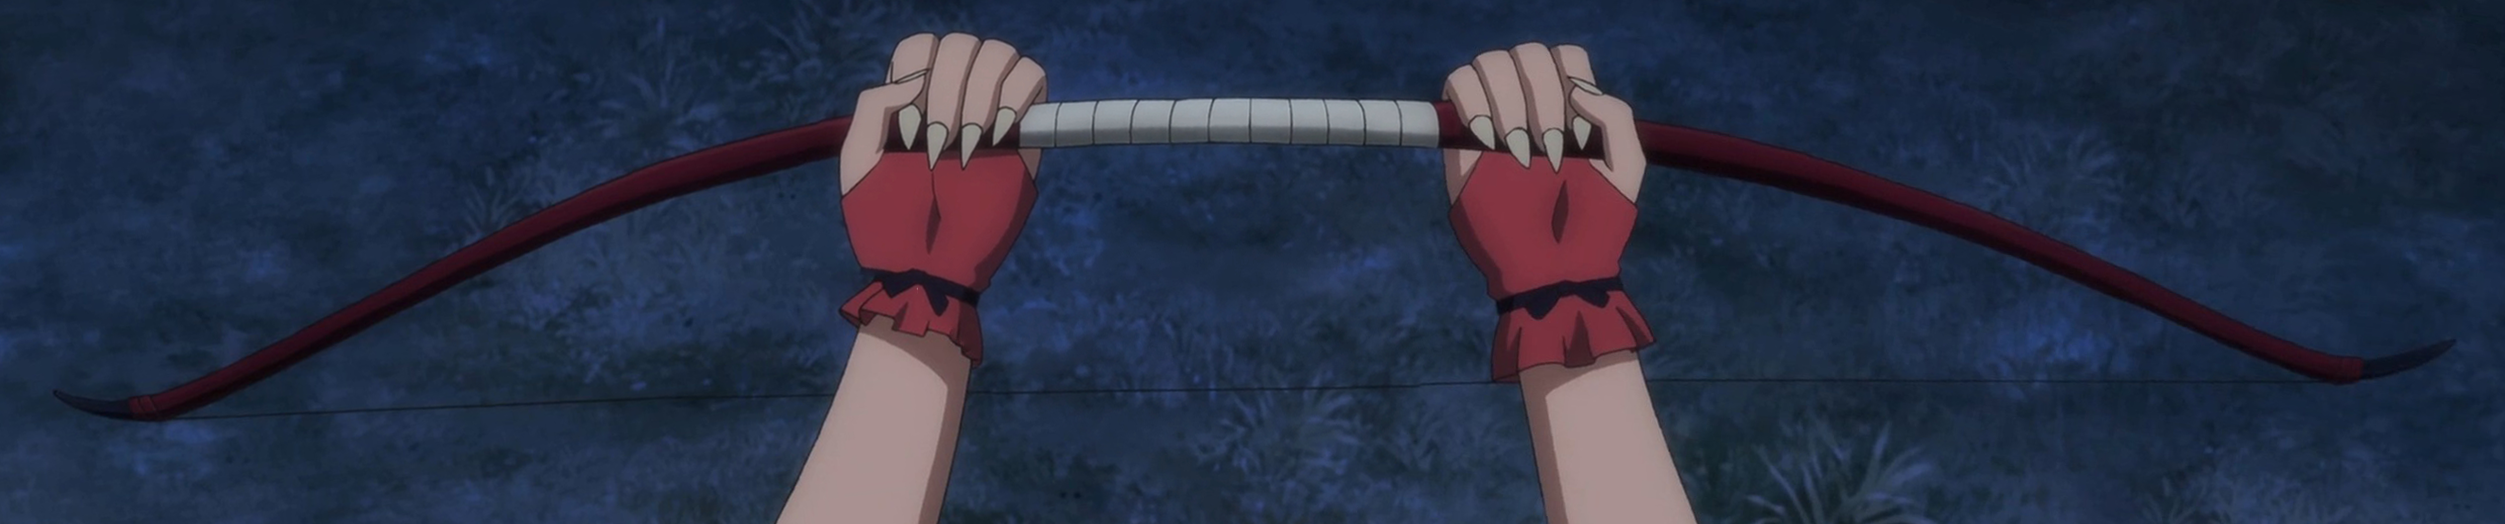 arrows, bow, and rumiko takahashi image